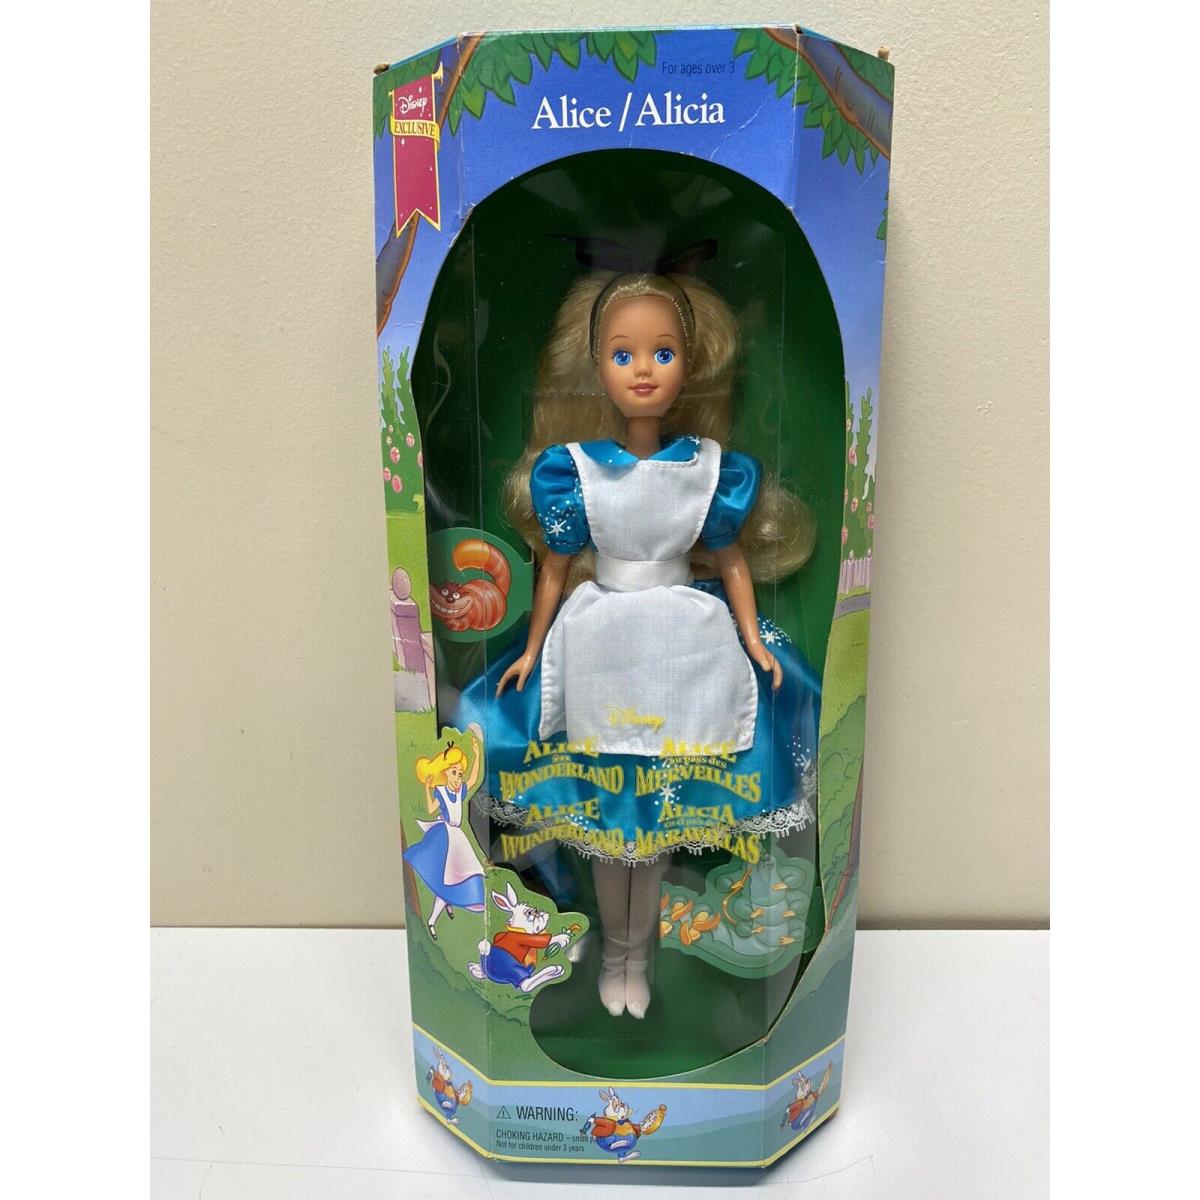 Disney Alice in Wonderland 1994 Mattel Alice/alicia Doll Disney Exclusive